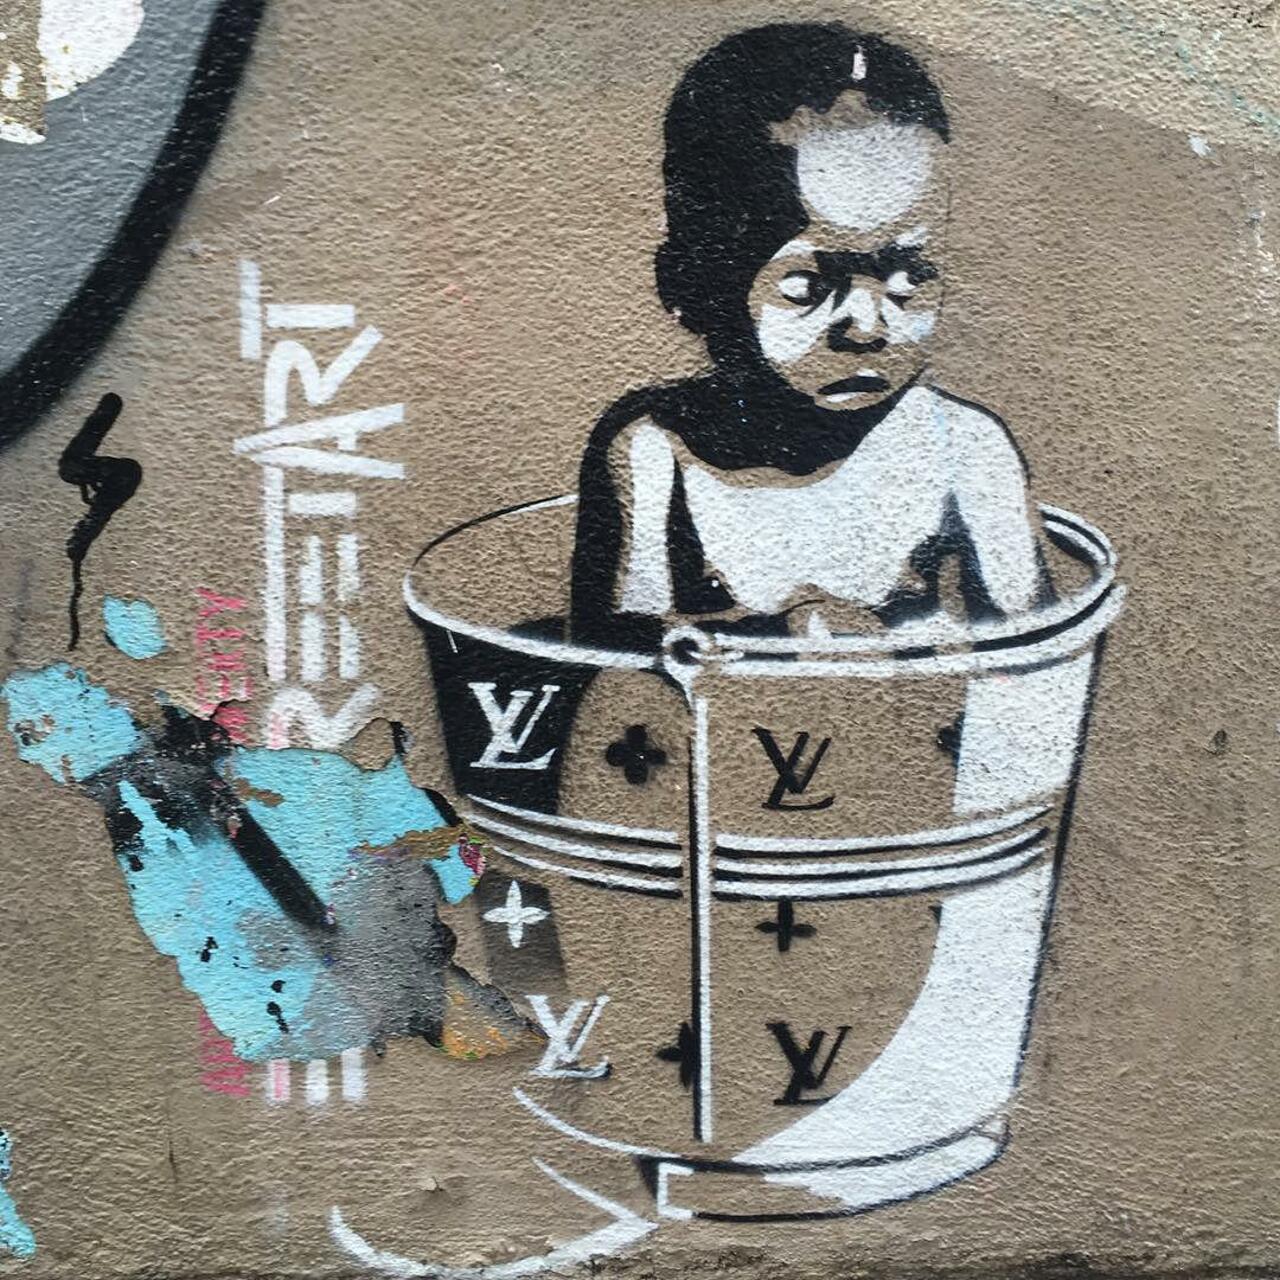 #Paris #graffiti photo by @catscoffeecreativity http://ift.tt/1OI6Vrj #StreetArt http://t.co/jheDbuXGPU